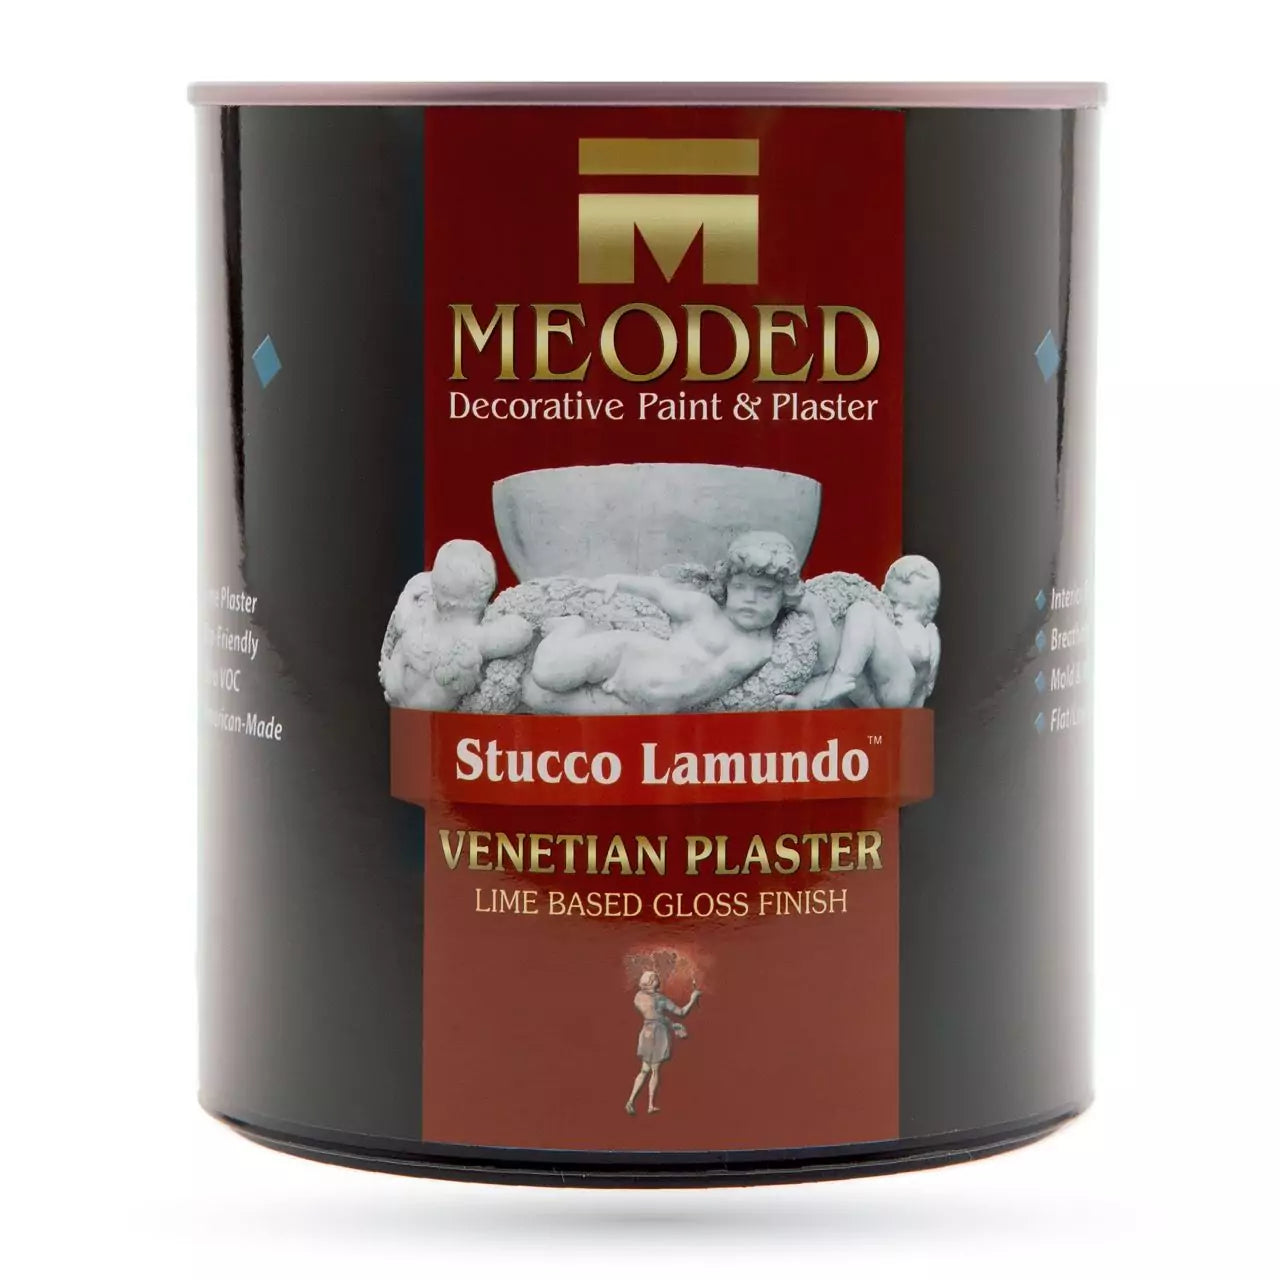 Meoded Stucco Lamundo Venetian Plaster